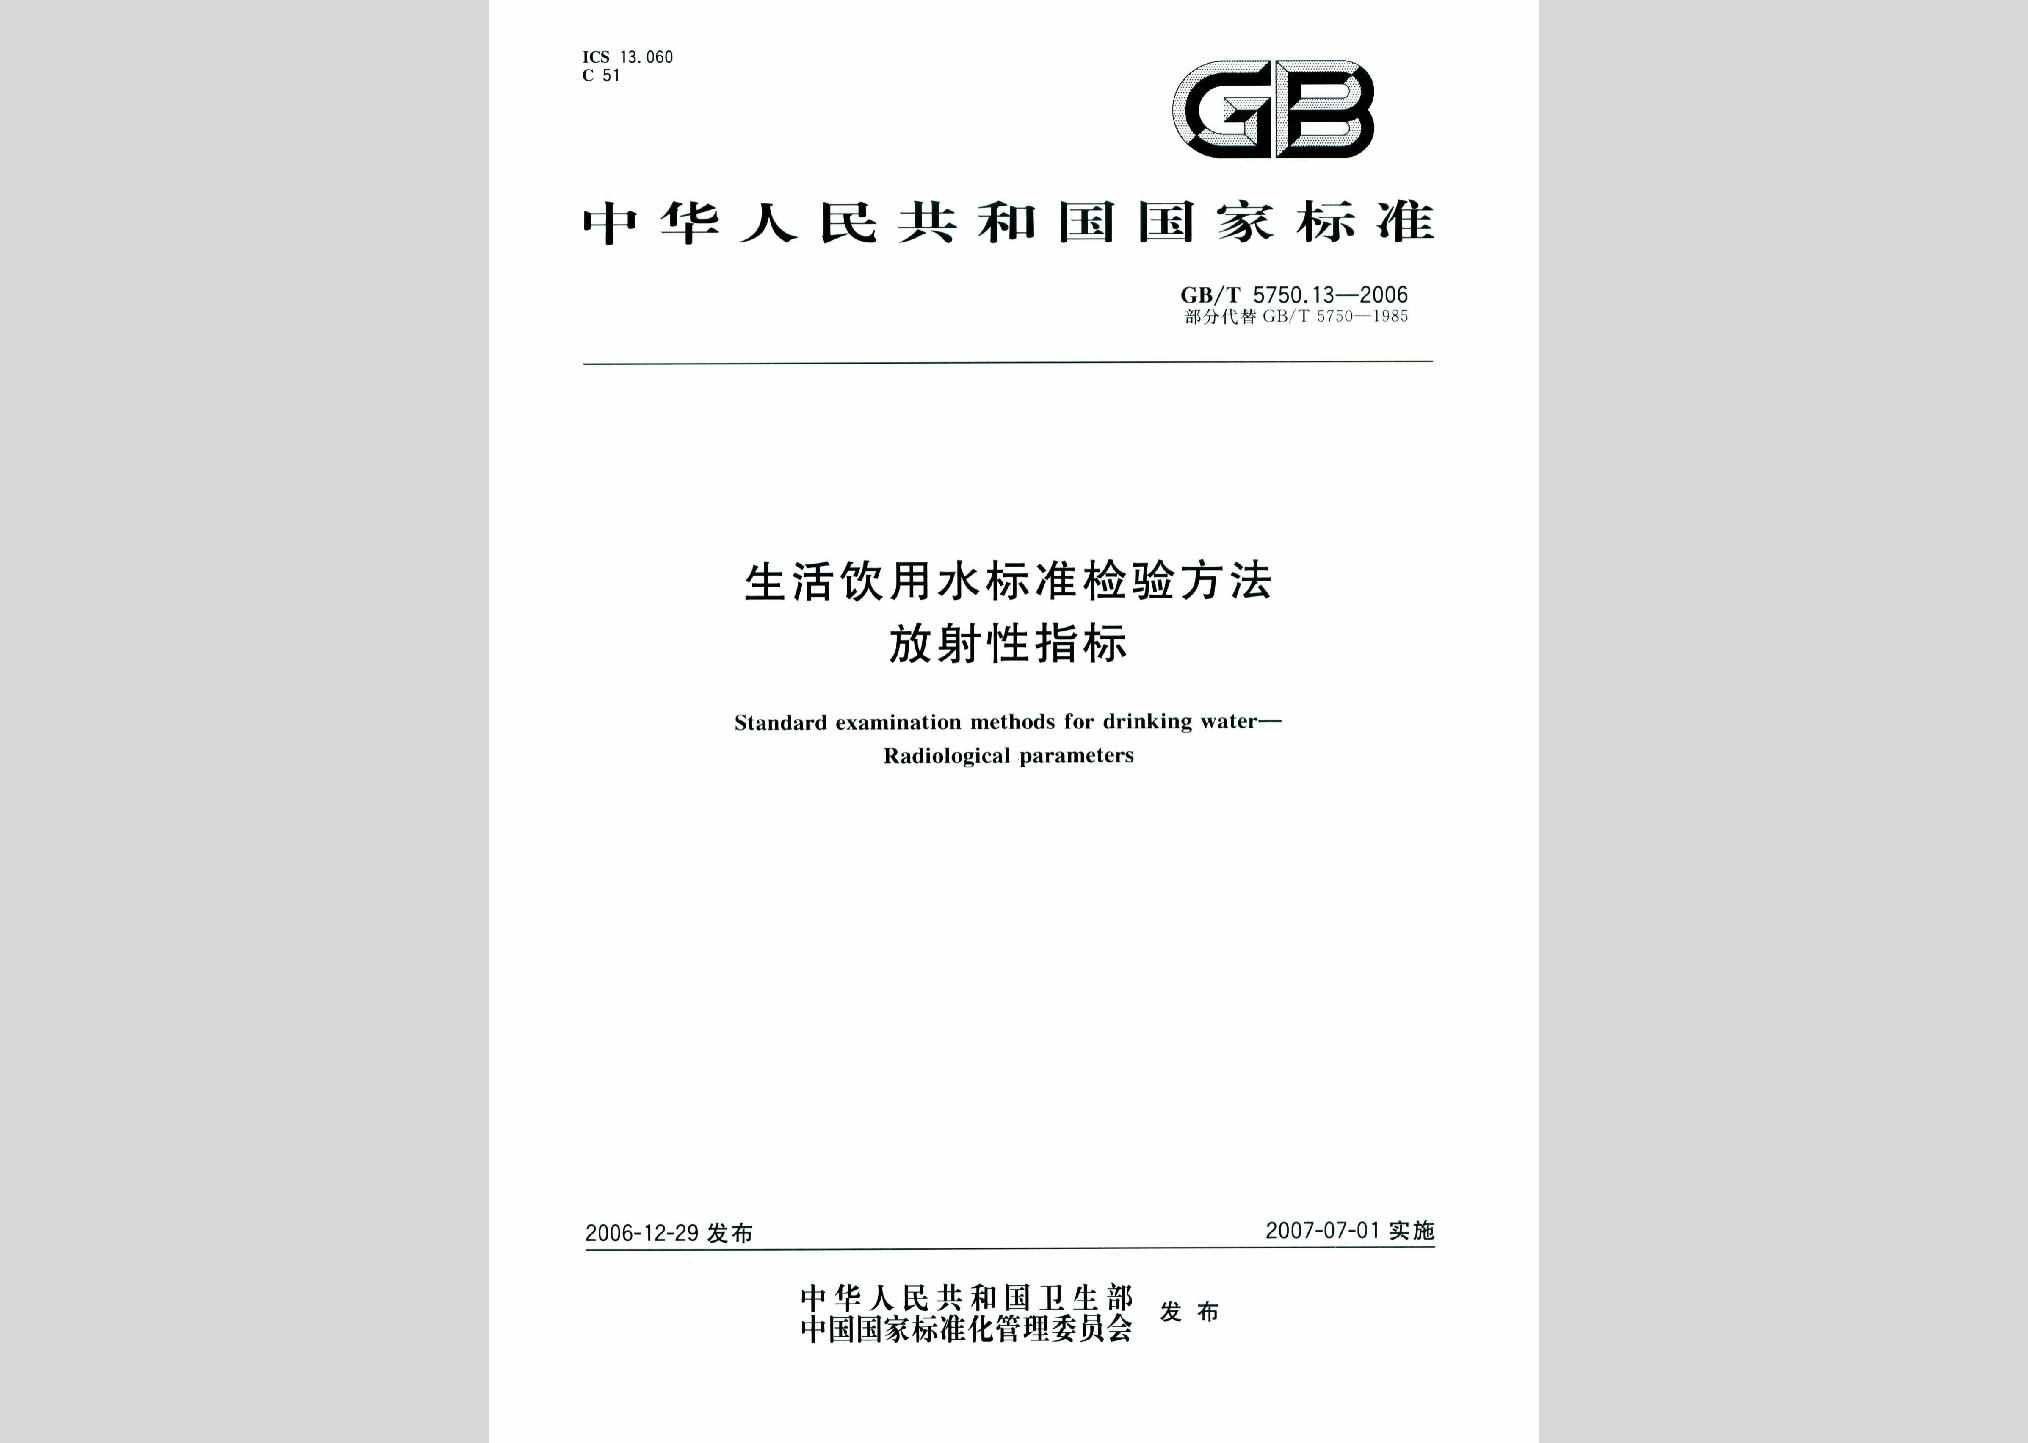 GB/T5750.13-2006：生活饮用水标准检验方法放射性指标